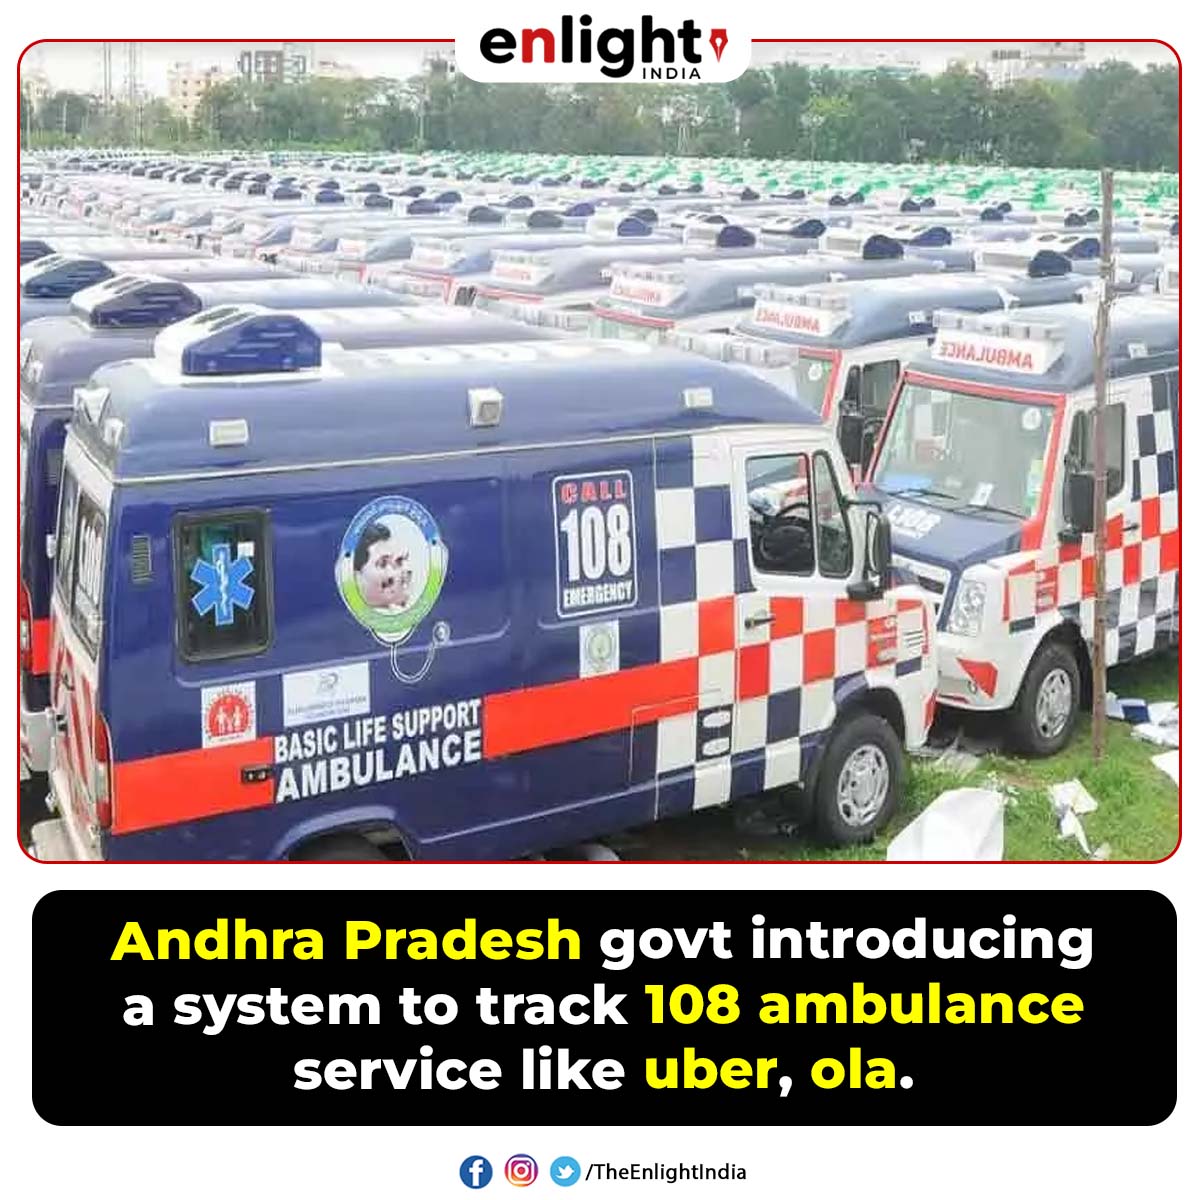 Andhra Pradesh govt introducing a system to track 108 ambulance service like uber, ola.

#AndhraPradesh #govt #108Ambulance #trackingsystem #uber #ola #Enlightindia